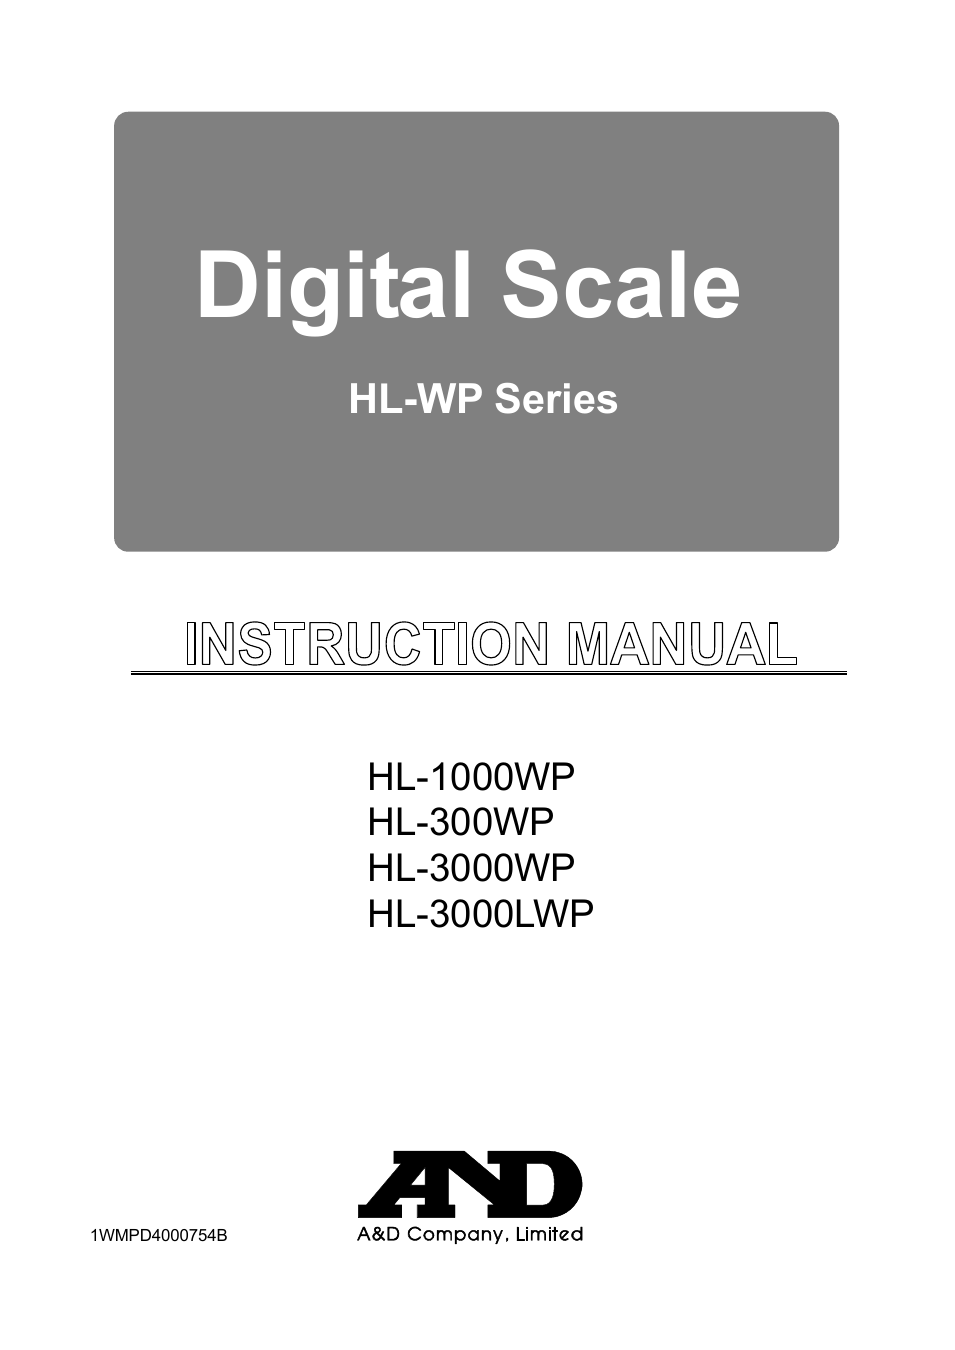 Digital Scale HL-3000WP (Page 1)